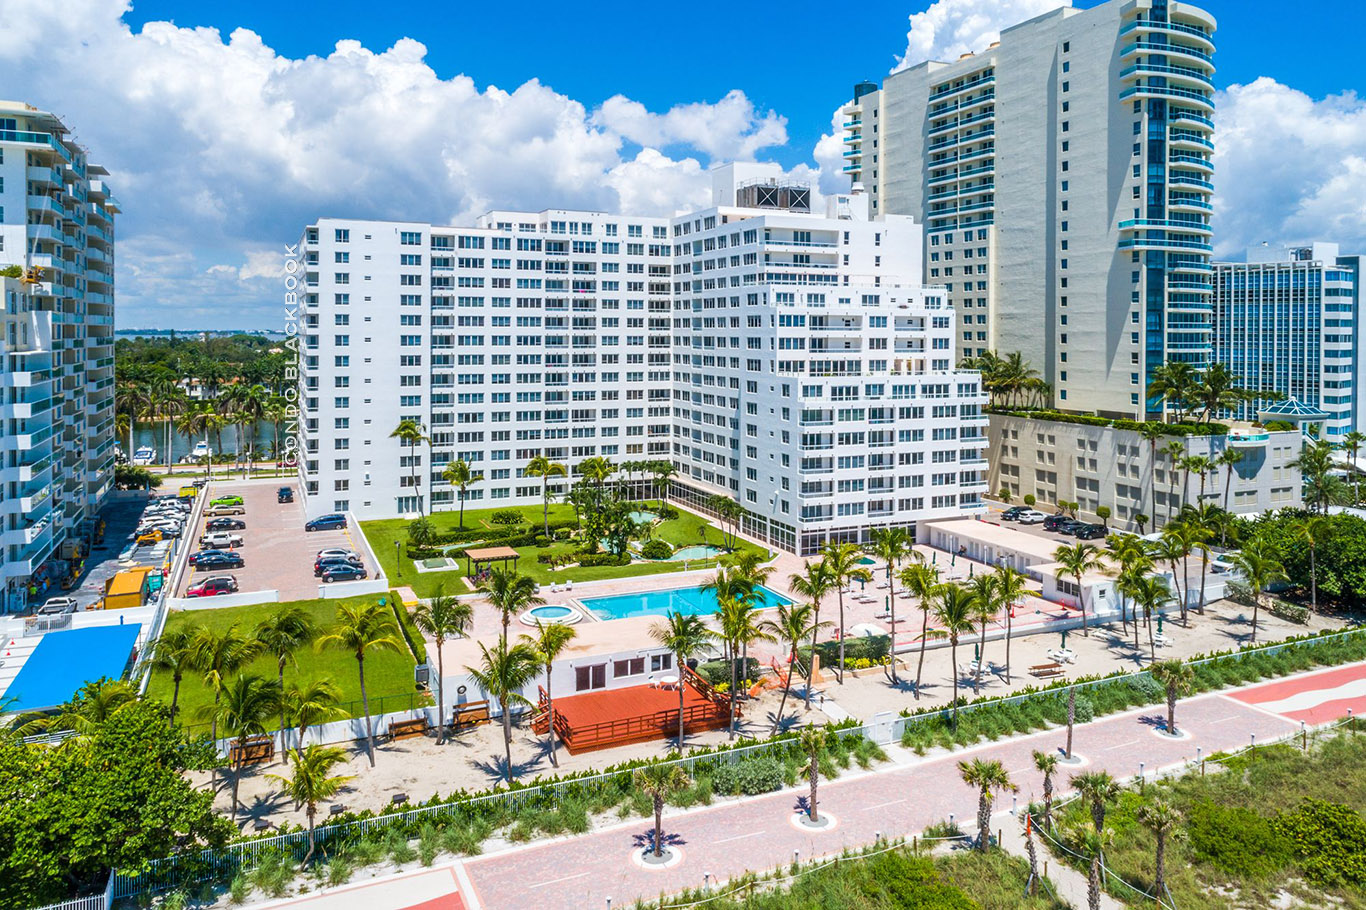 Carriage Club North Condos for Sale and Rent in Mid-Beach - Miami Beach |  CondoBlackBook